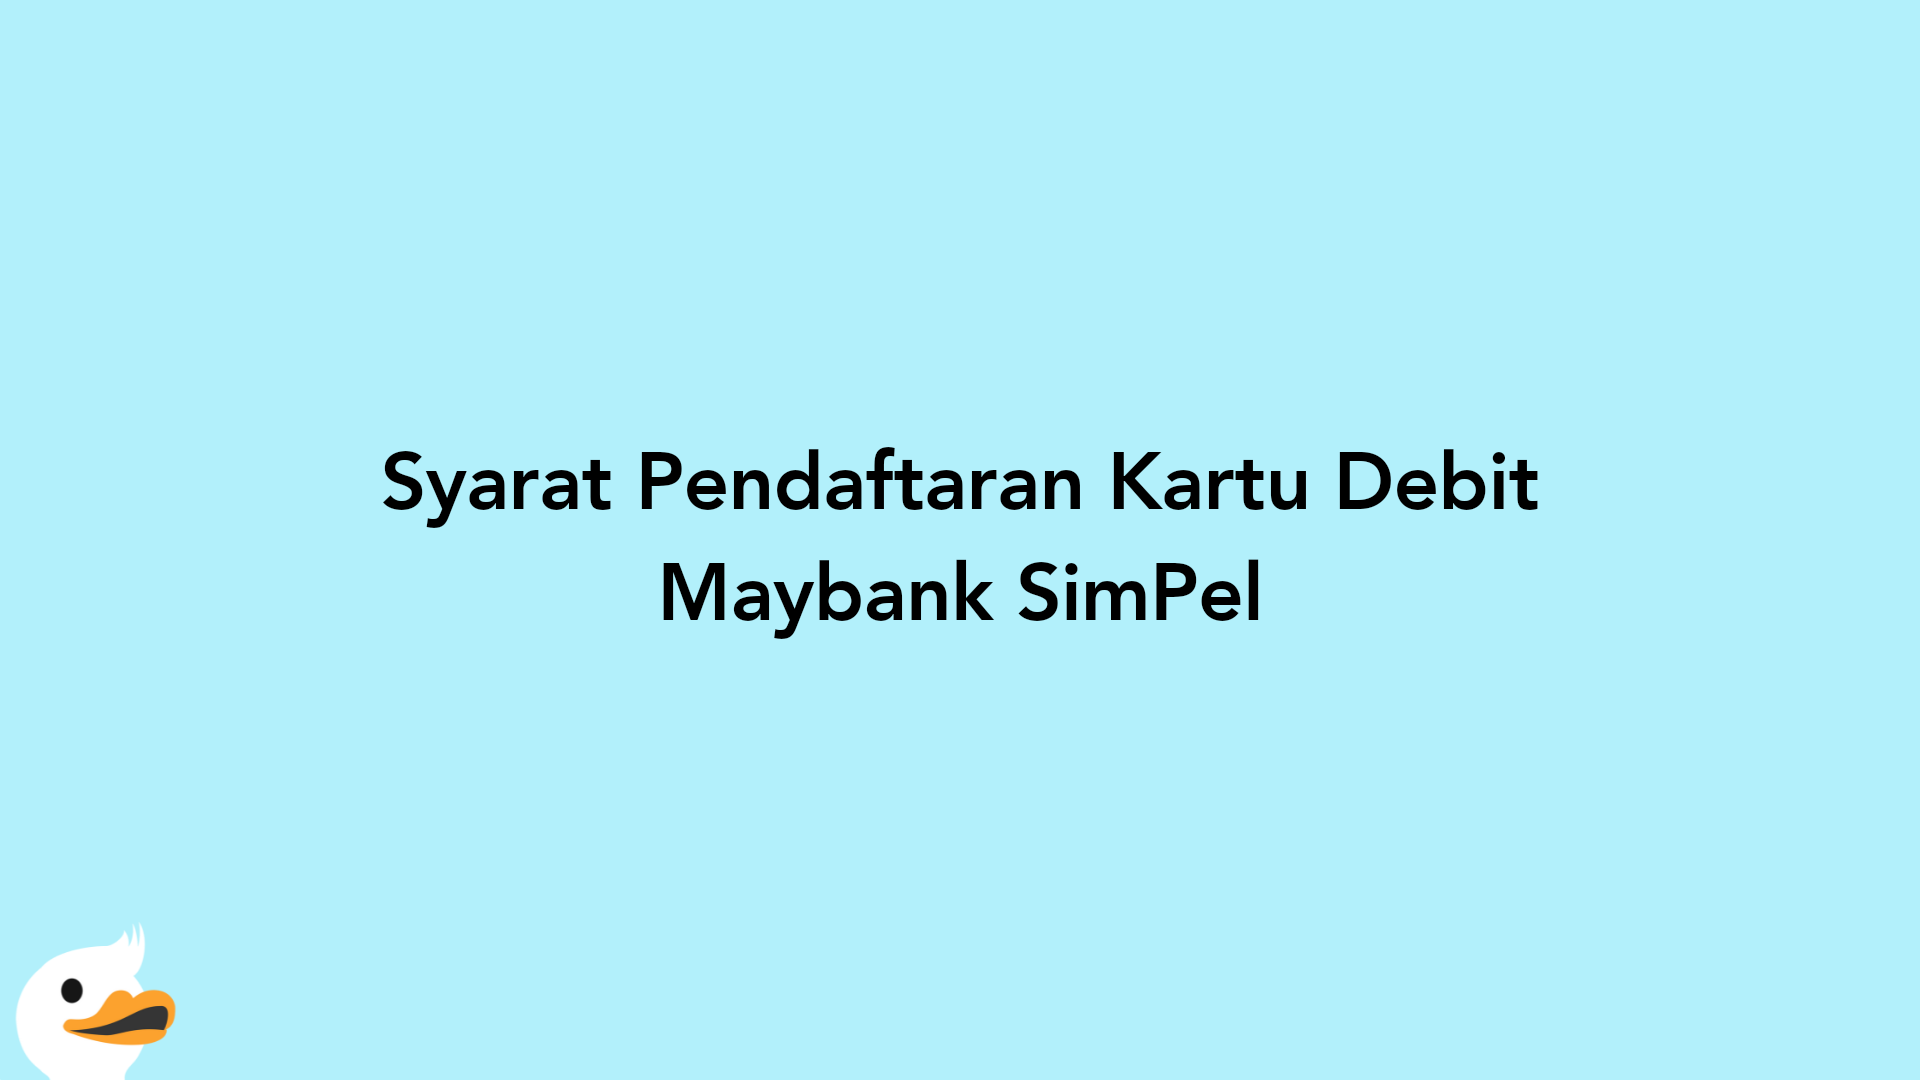 Syarat Pendaftaran Kartu Debit Maybank SimPel